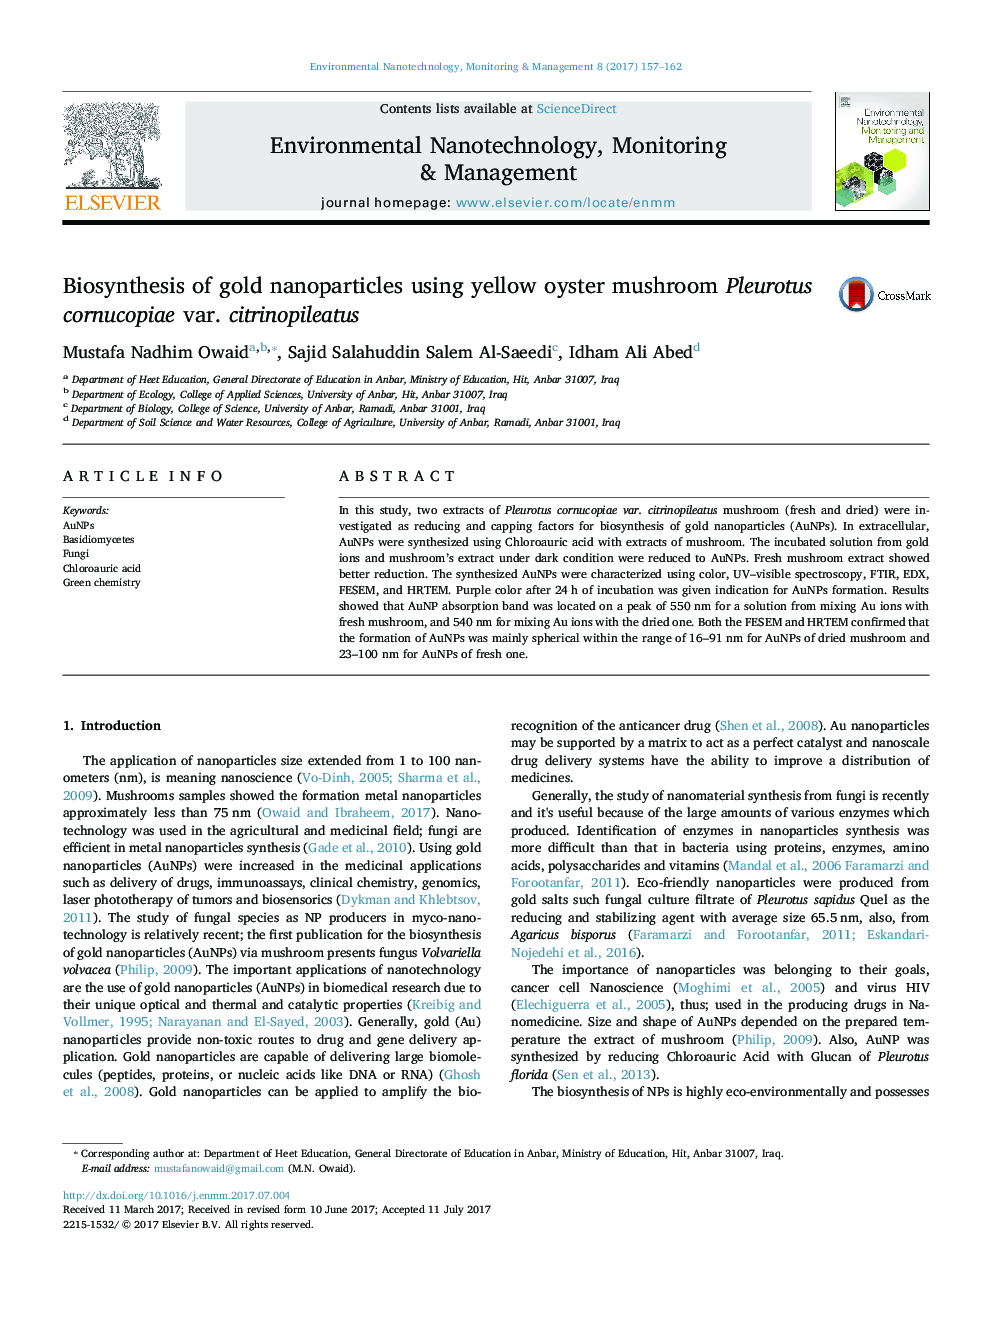 Biosynthesis of gold nanoparticles using yellow oyster mushroom Pleurotus cornucopiae var. citrinopileatus